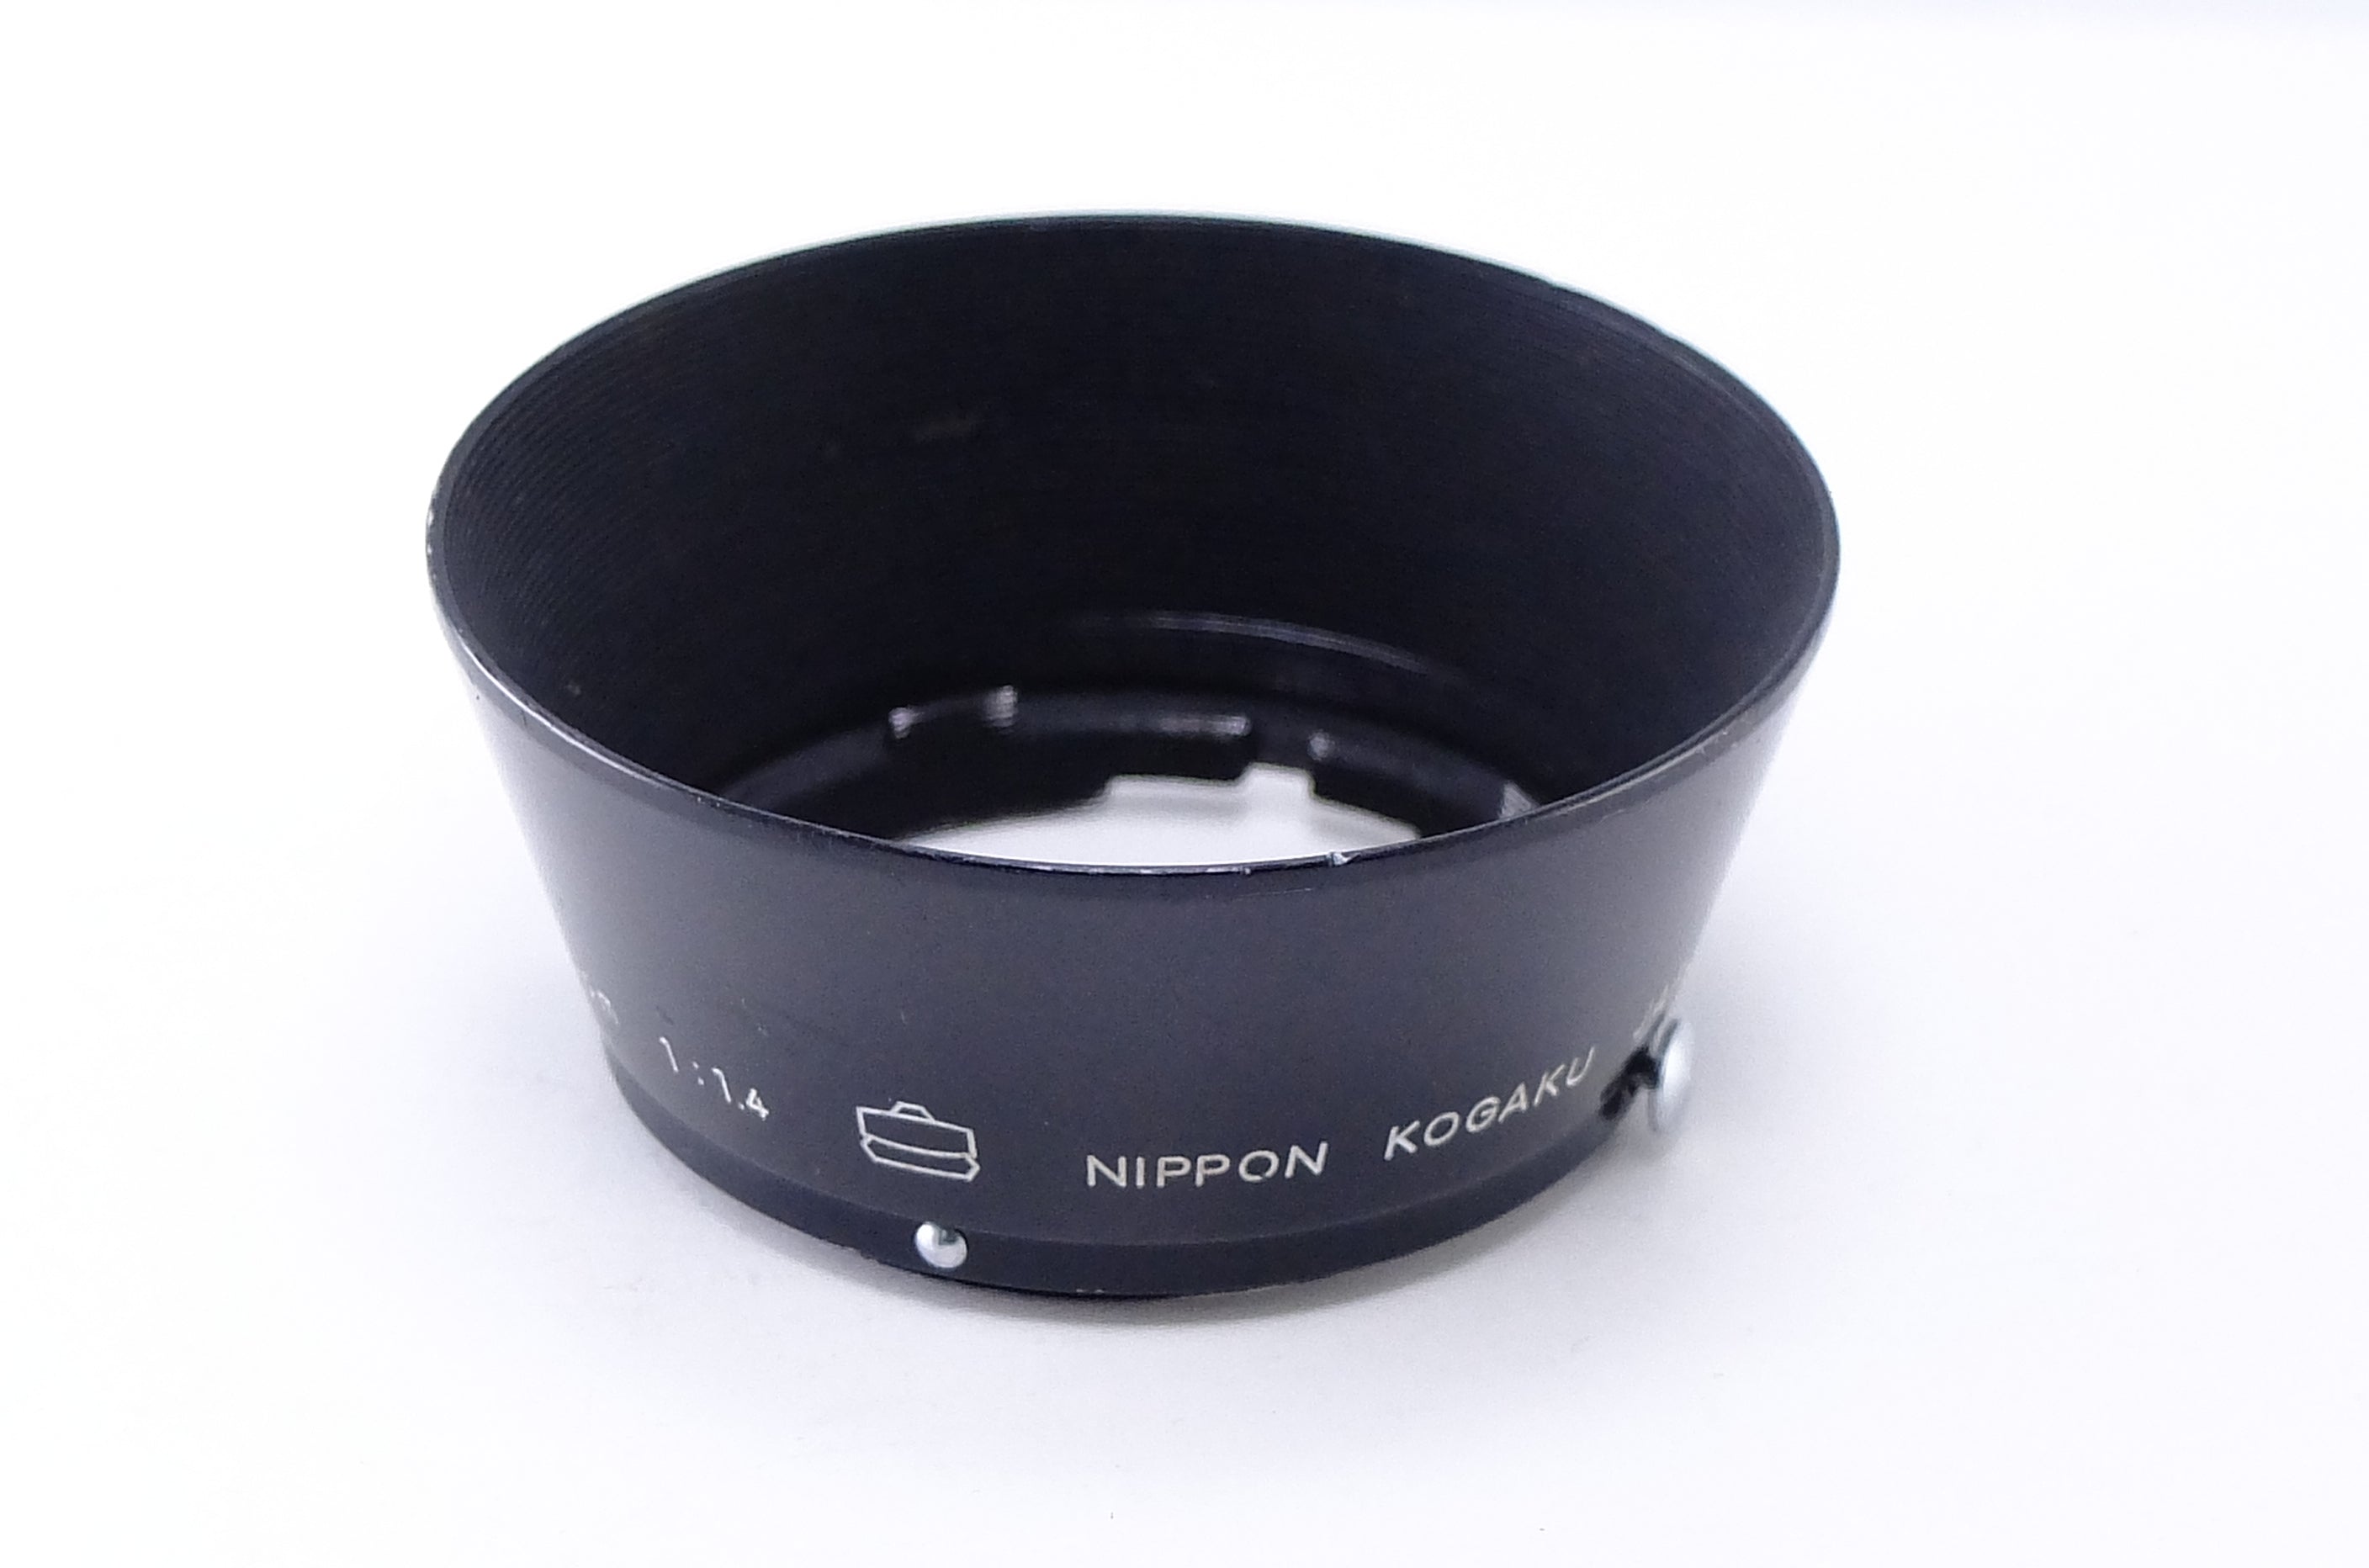 【Nikon】NIPPON KOGAKU f=5cm 1:1.4 メタルフード 日本光学 S用 